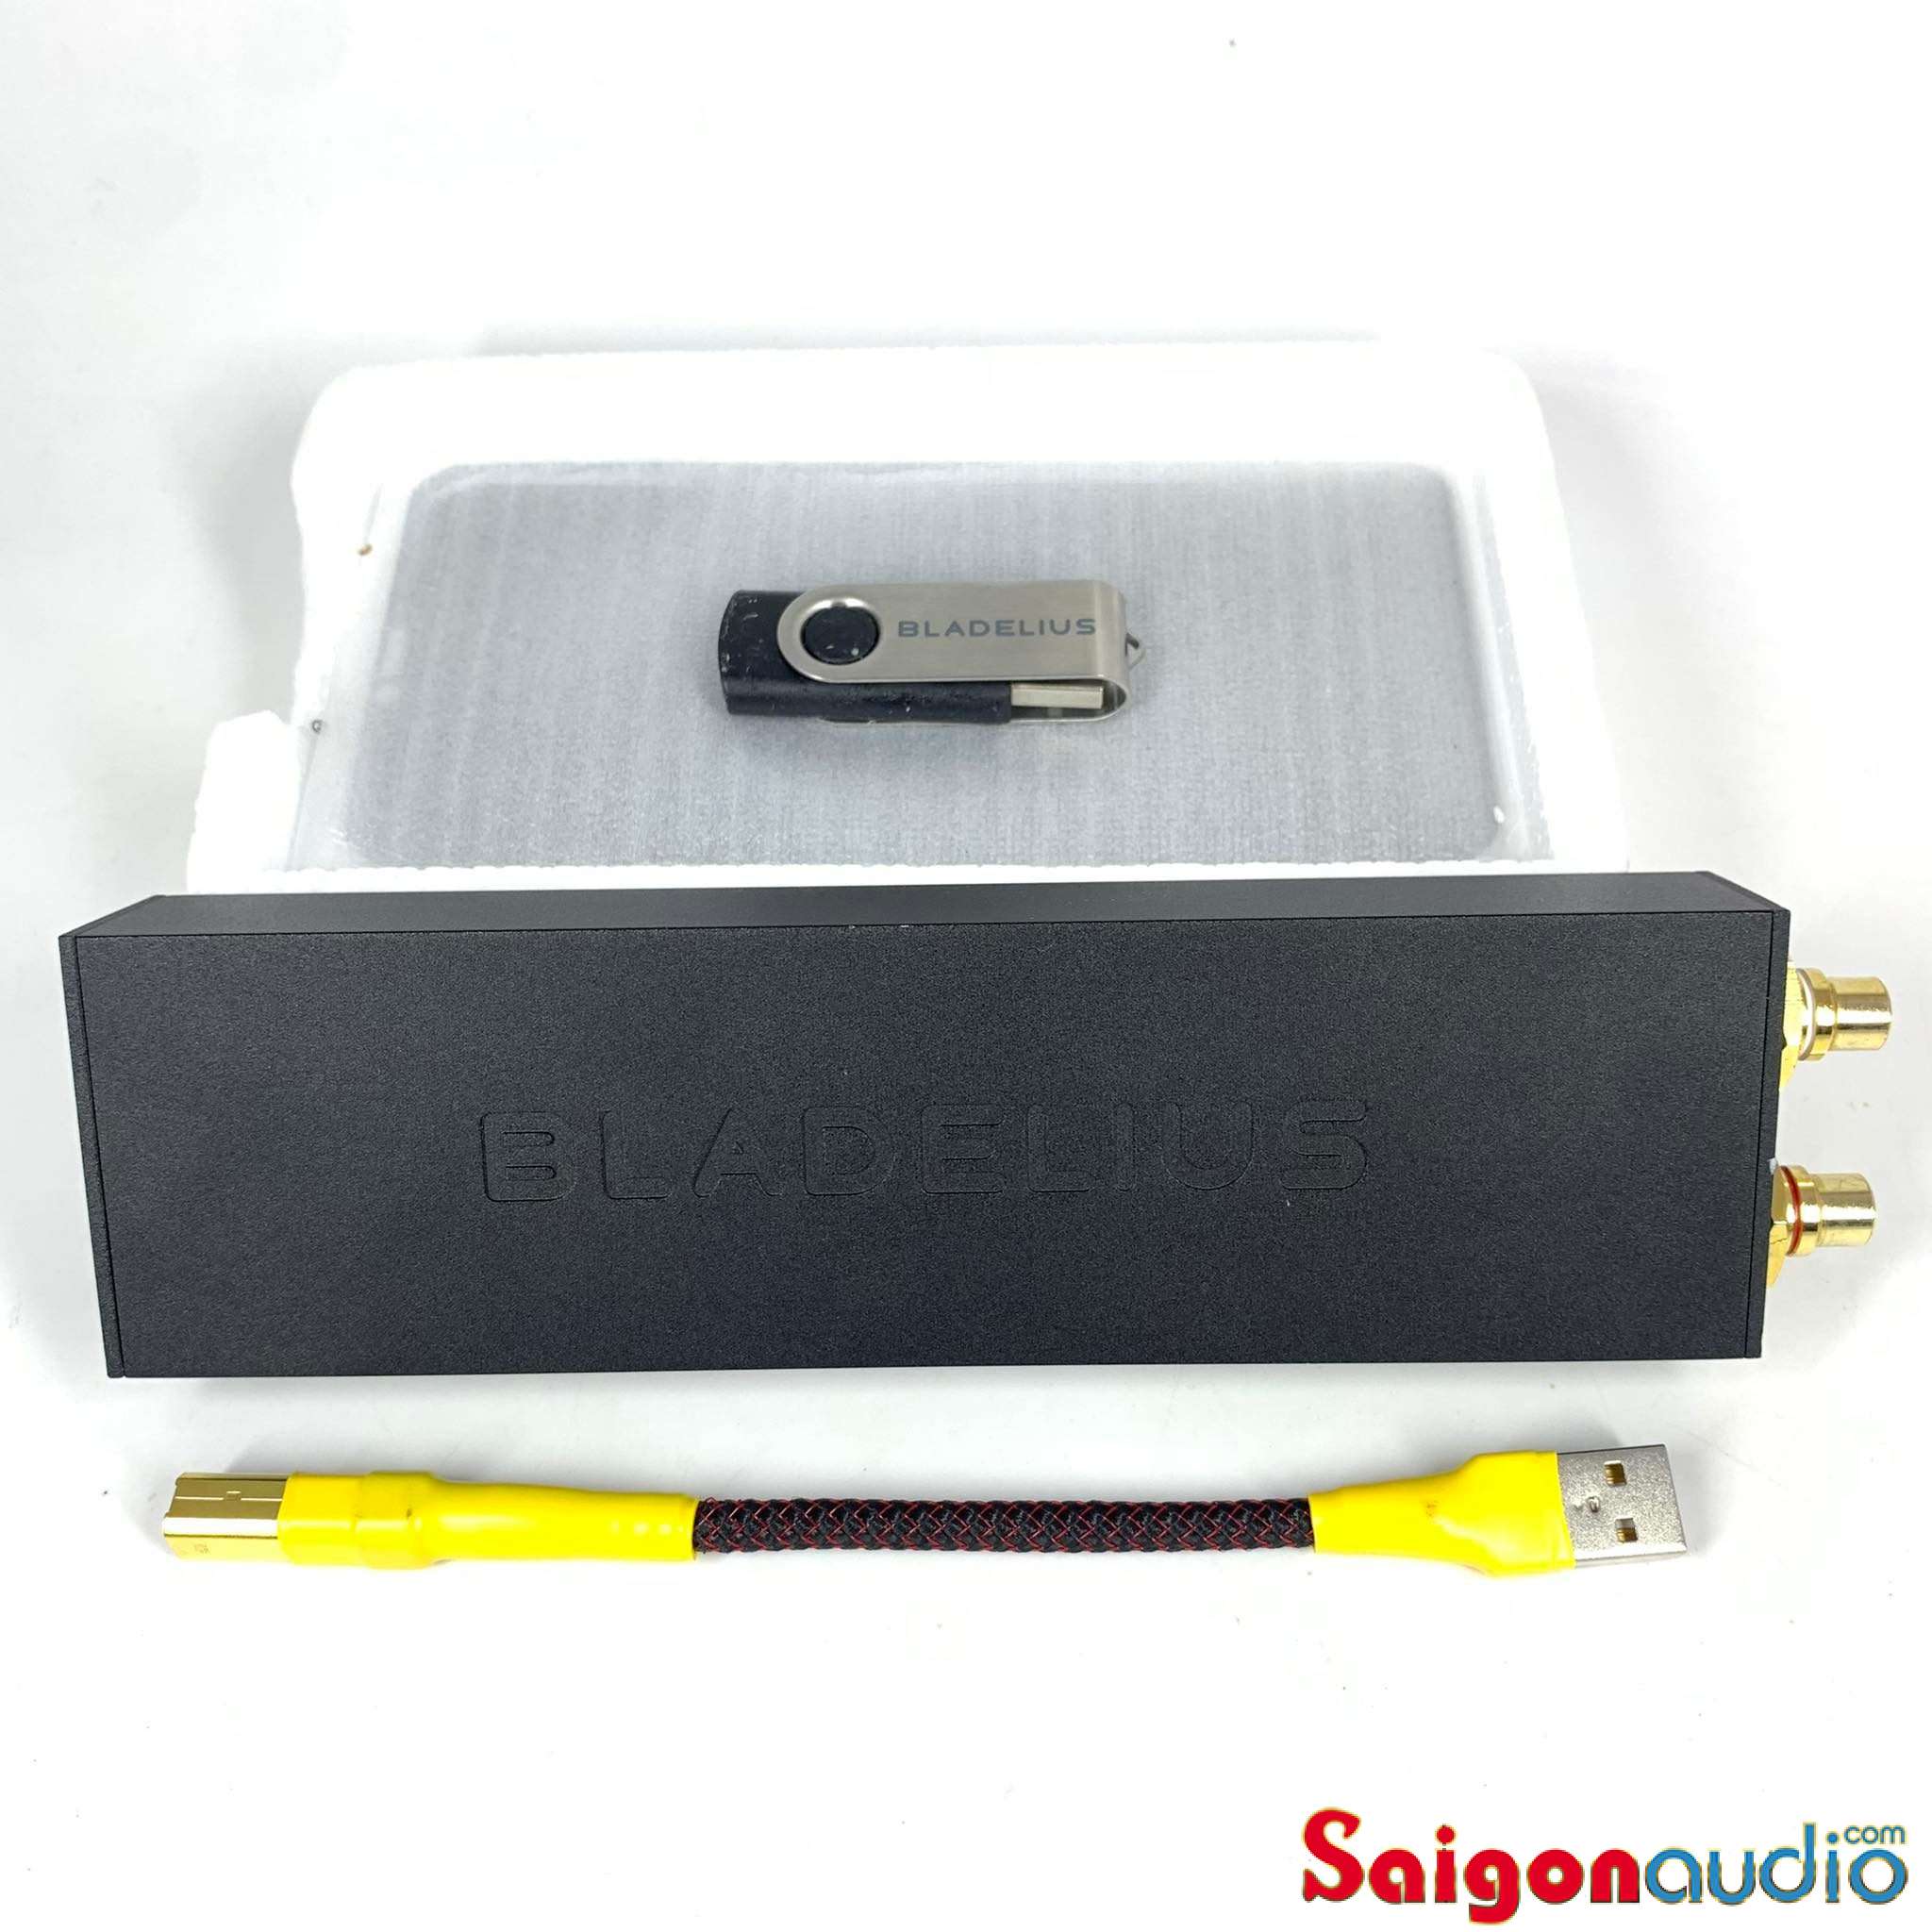 DAC BLADELIUS USB 24bit/192kHz, tặng kèm dây USB